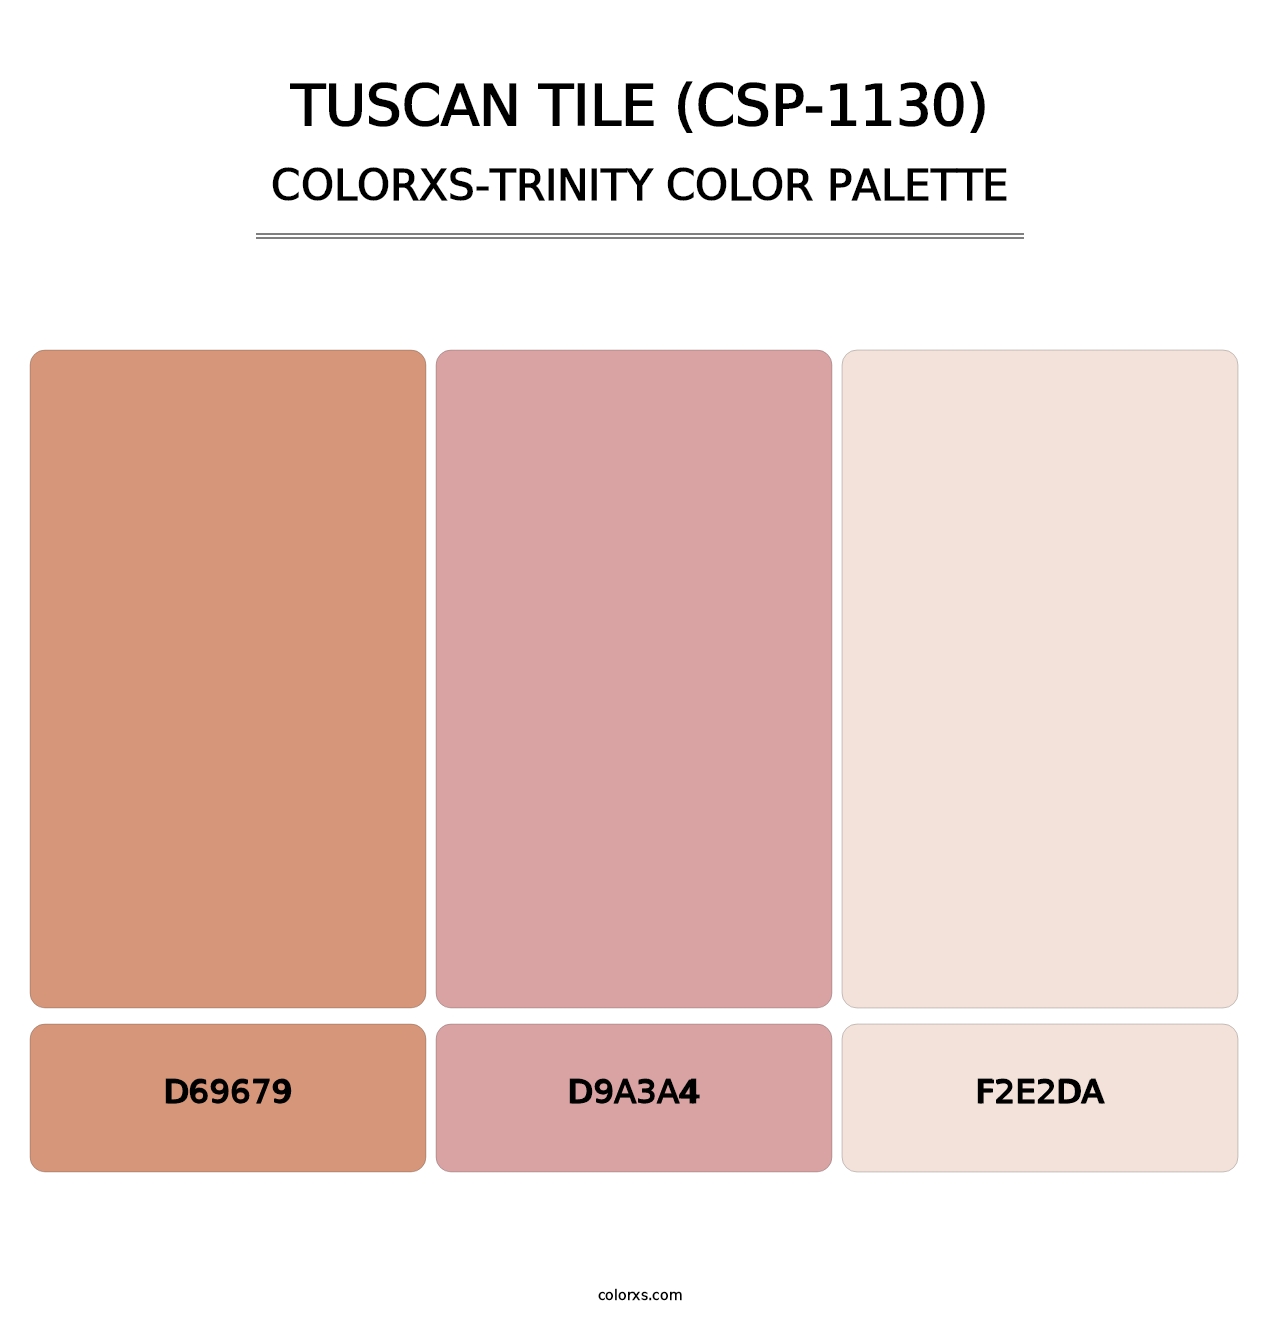 Tuscan Tile (CSP-1130) - Colorxs Trinity Palette